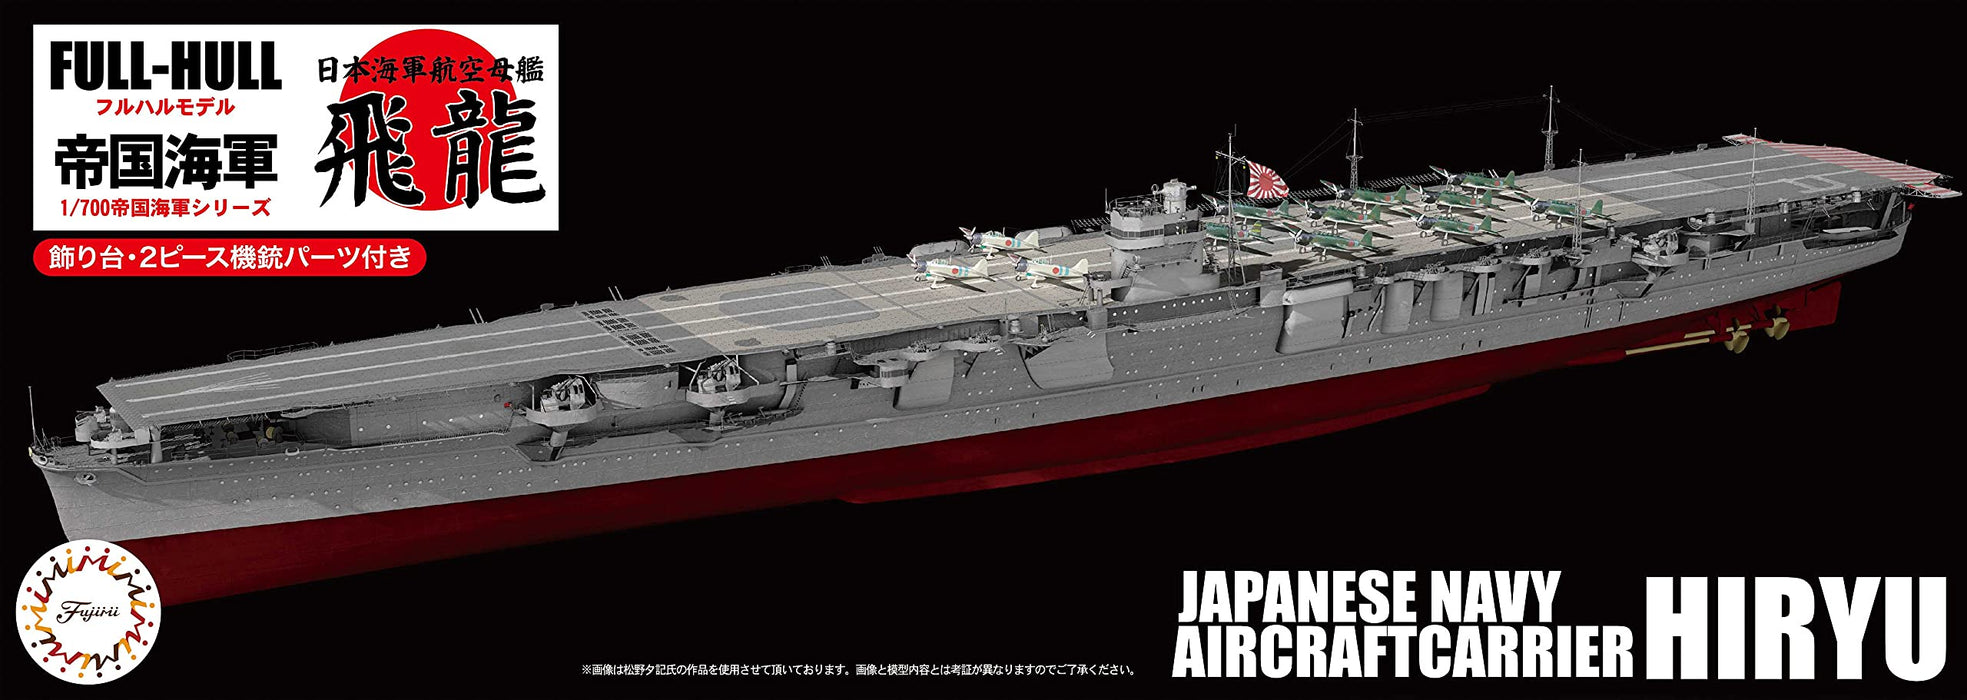 Fujimi Model 1/700 Imperial Navy Series No.25 Japanese Navy Aircraft Carrier Hiryu Full Hull Model Fh-25